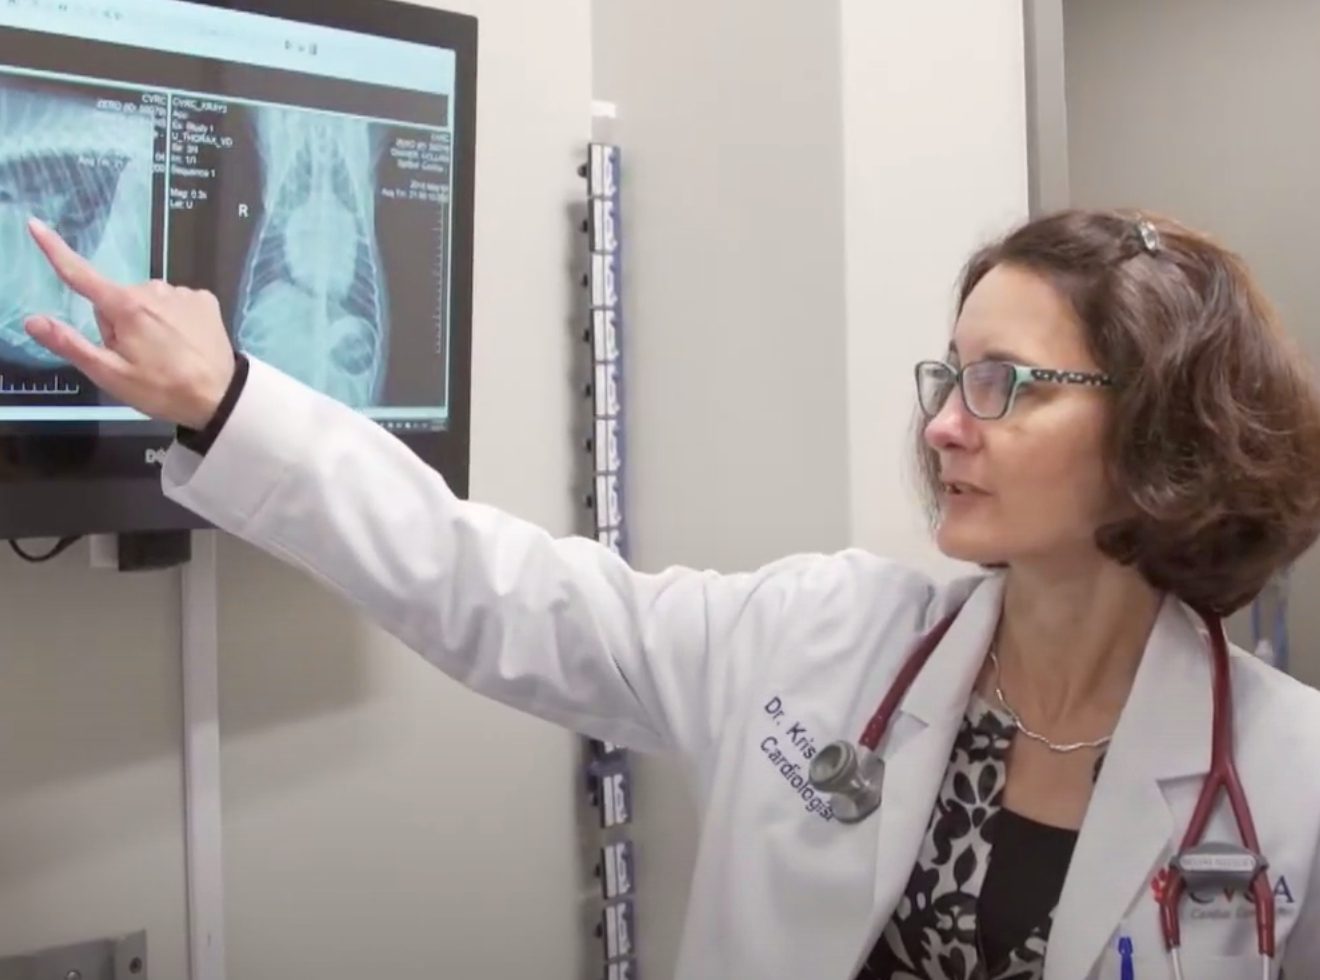 CVCA vet cardiologist diplomate explains while gesturing to echocardiogram